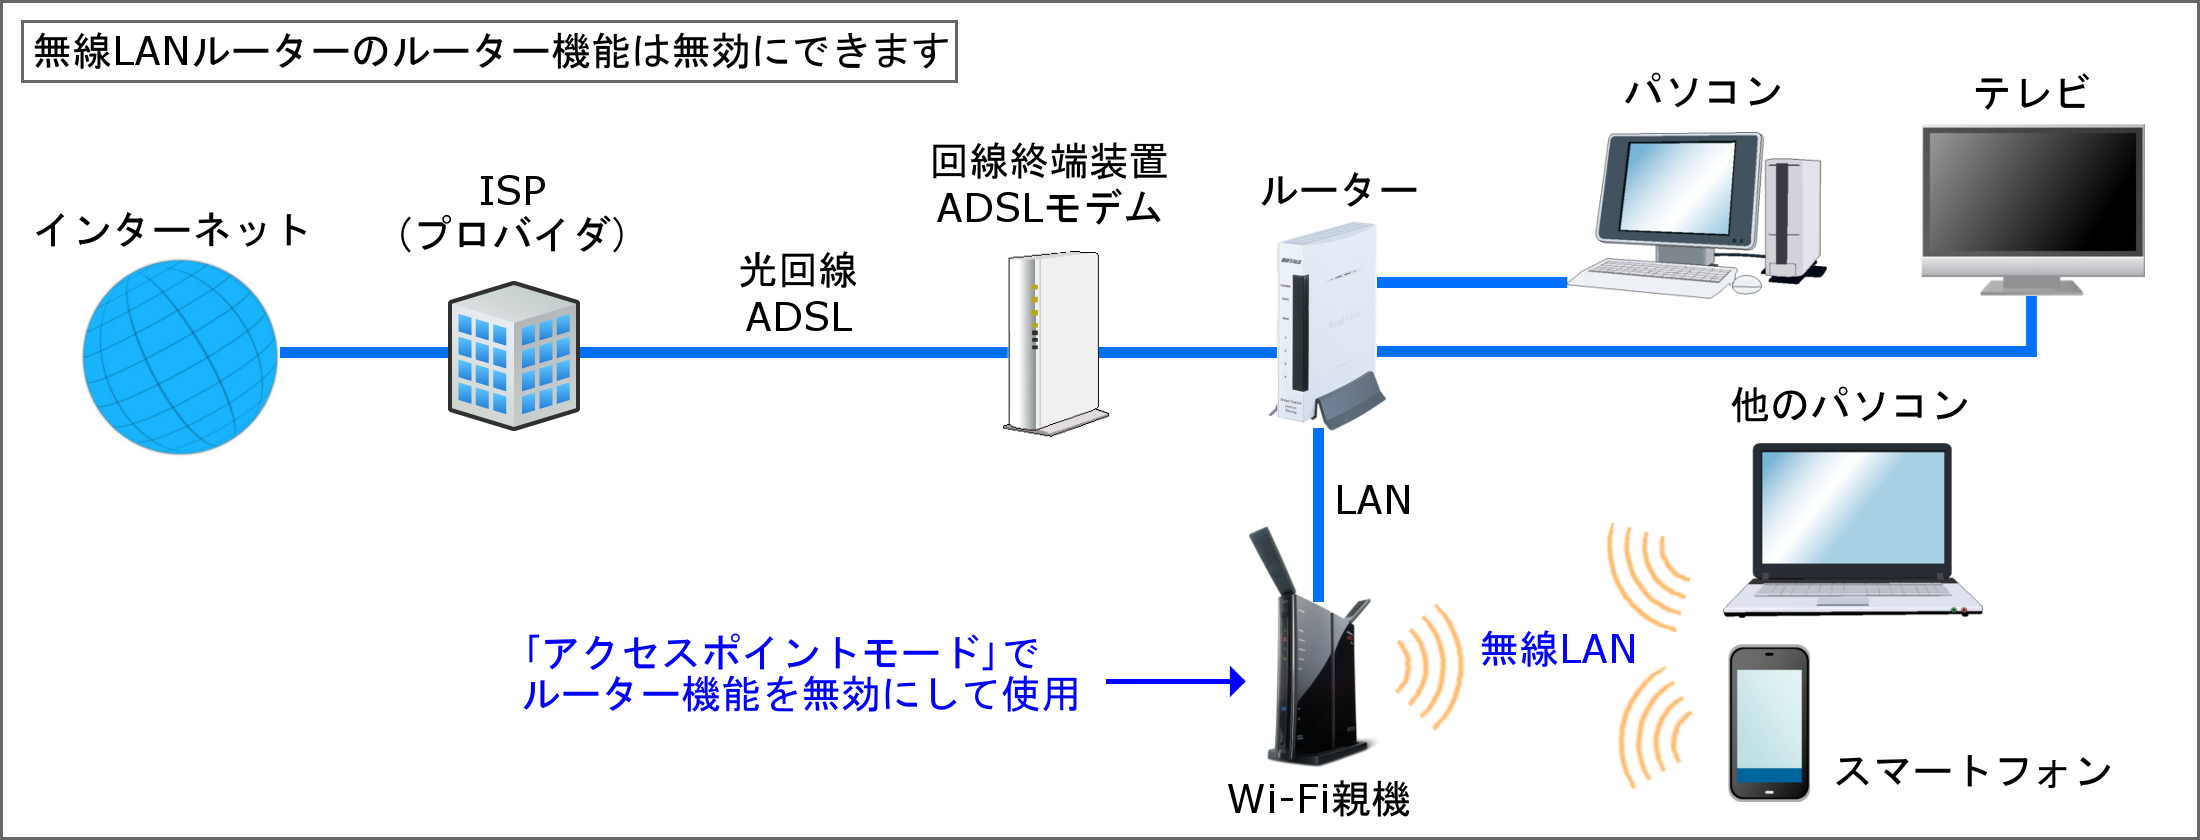 wi-fi05.png